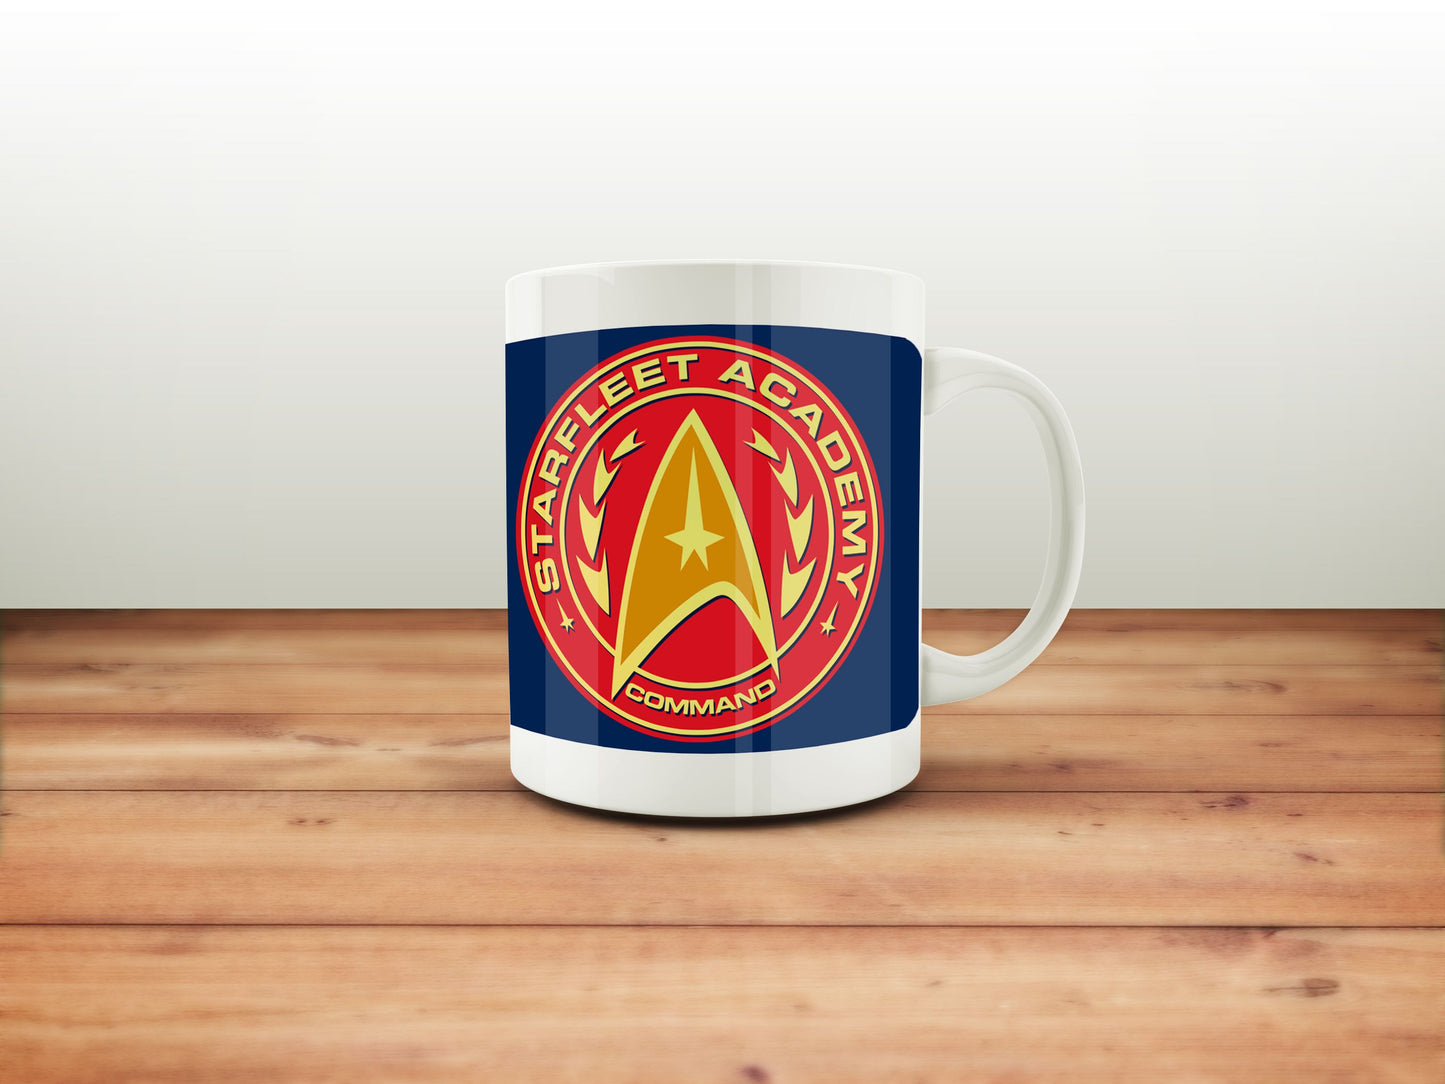 Mug Star Trek - Starfleet Academy